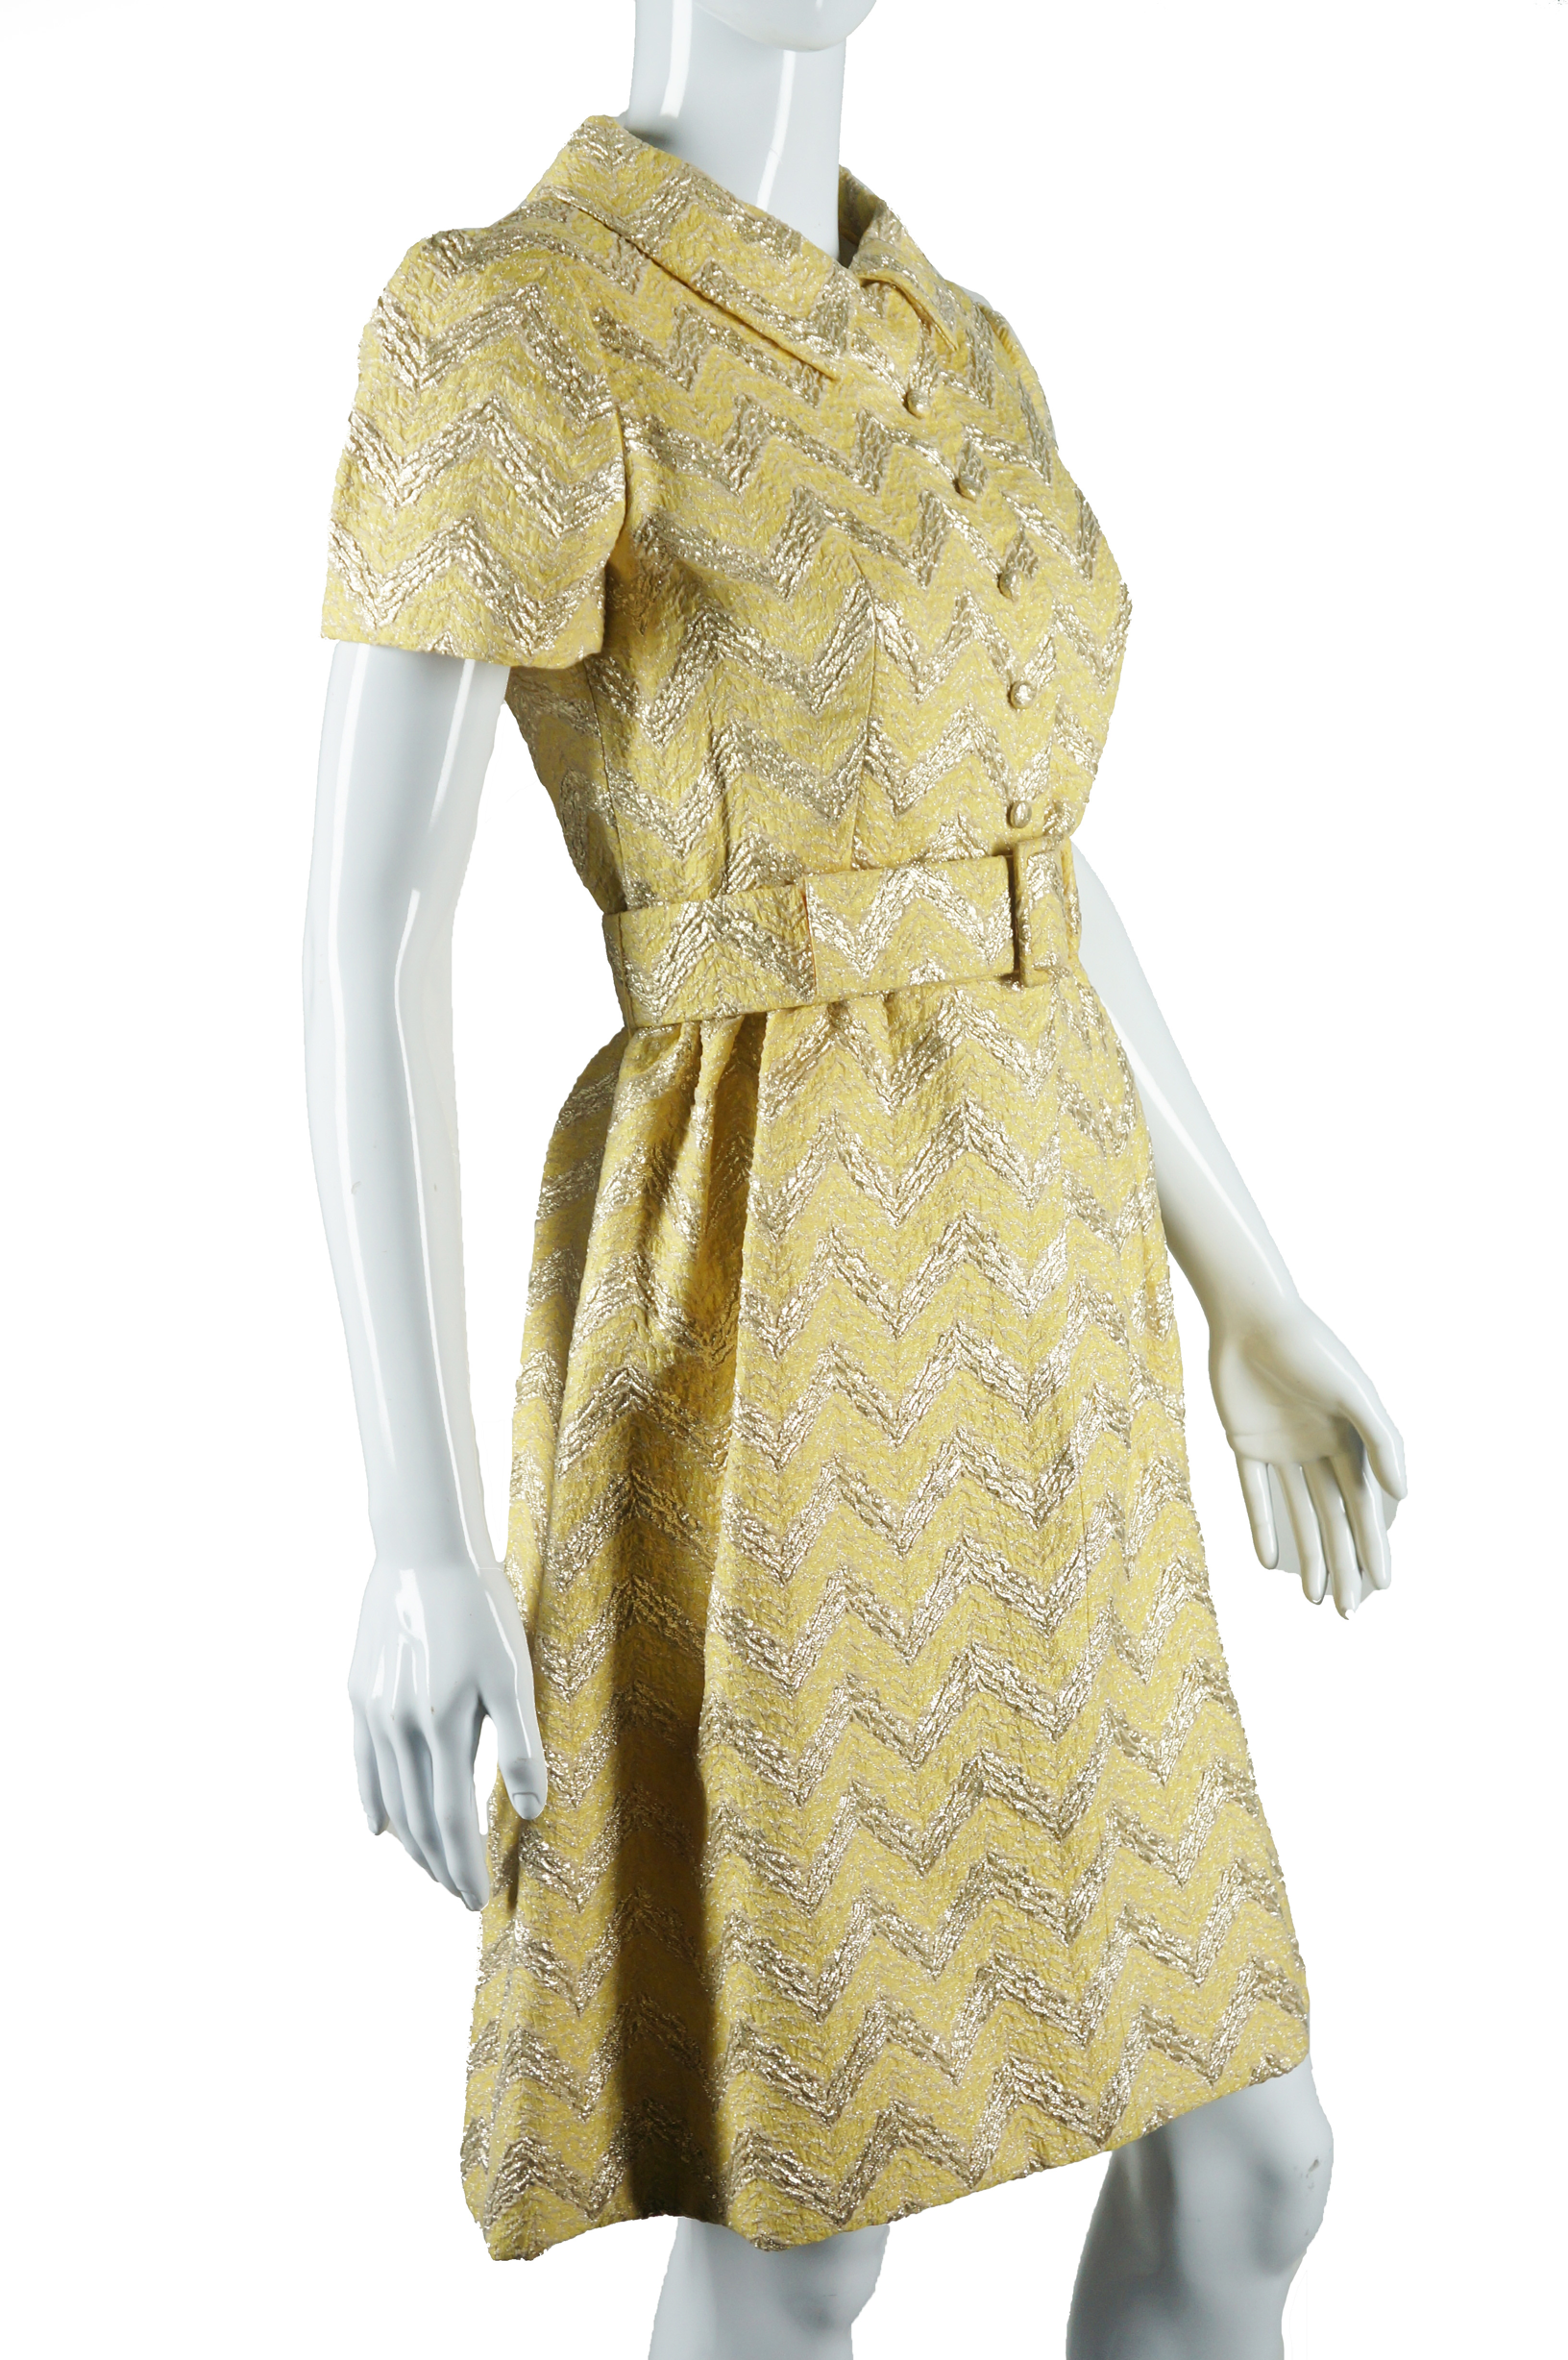 Adele Simpson Yellow and Gold Zig Zag Dress - Embers / Cinders Vintage